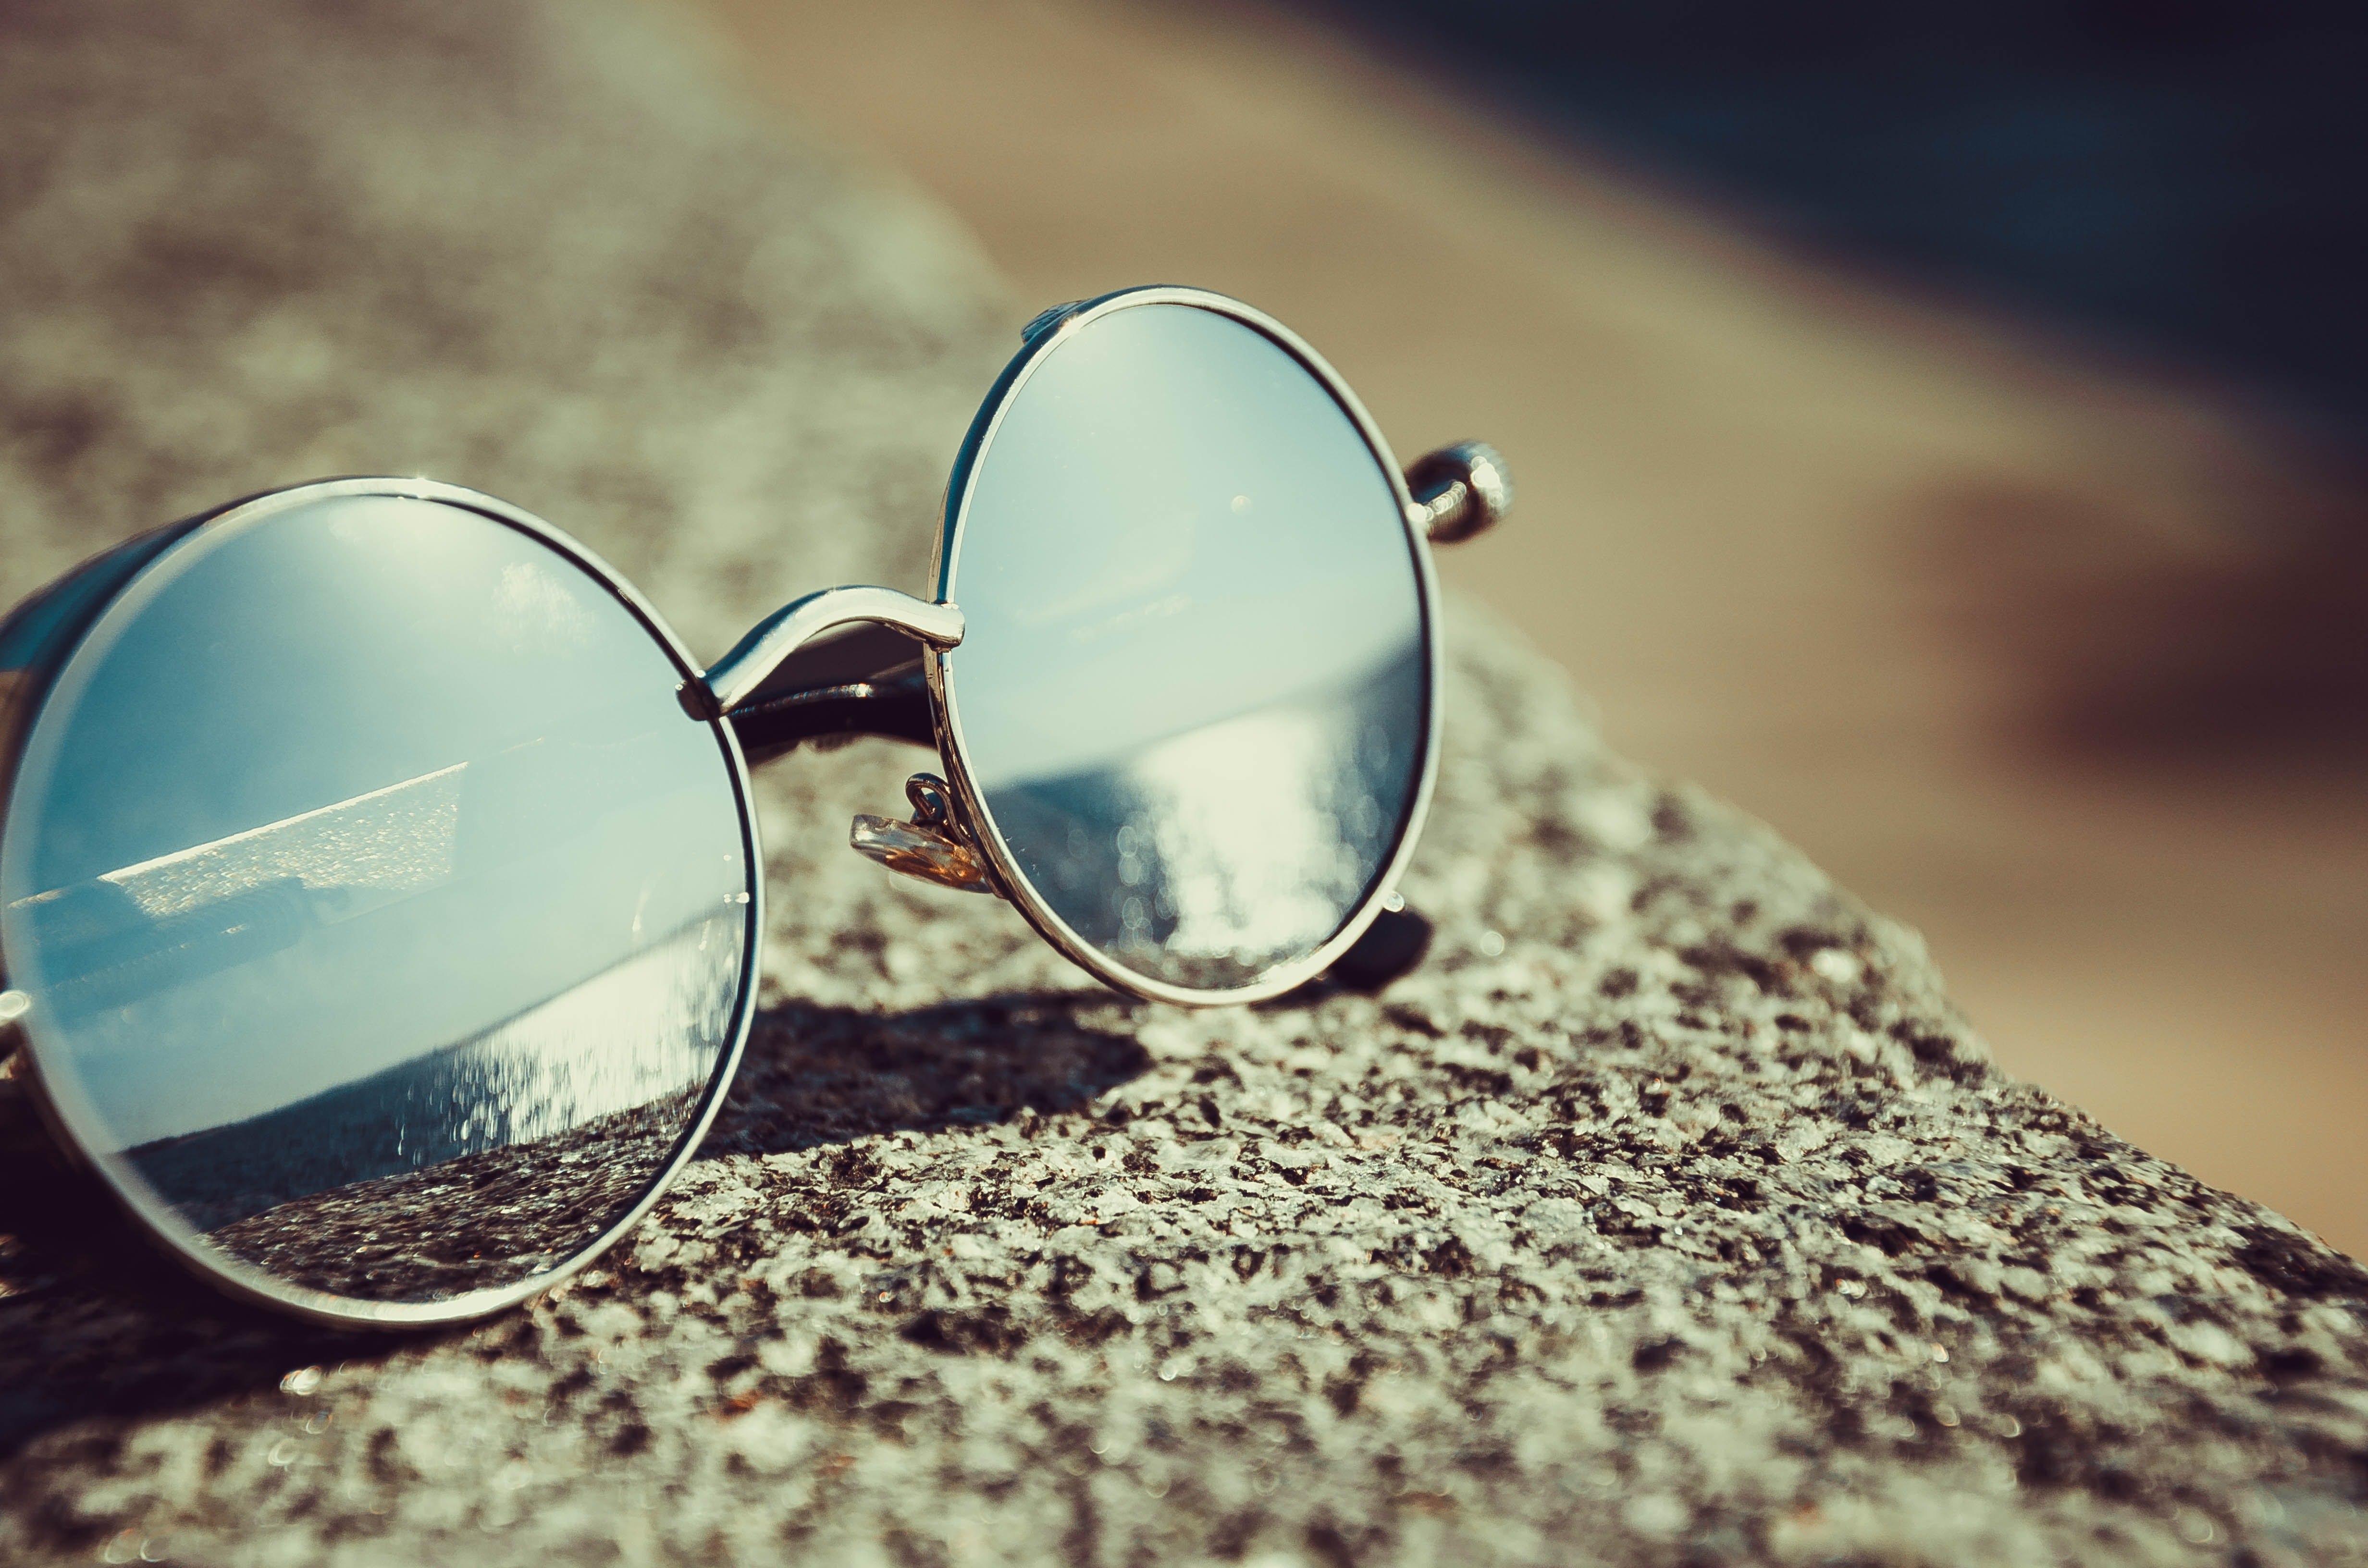 Best Sun Glasses Photo · 100% Free Downloads